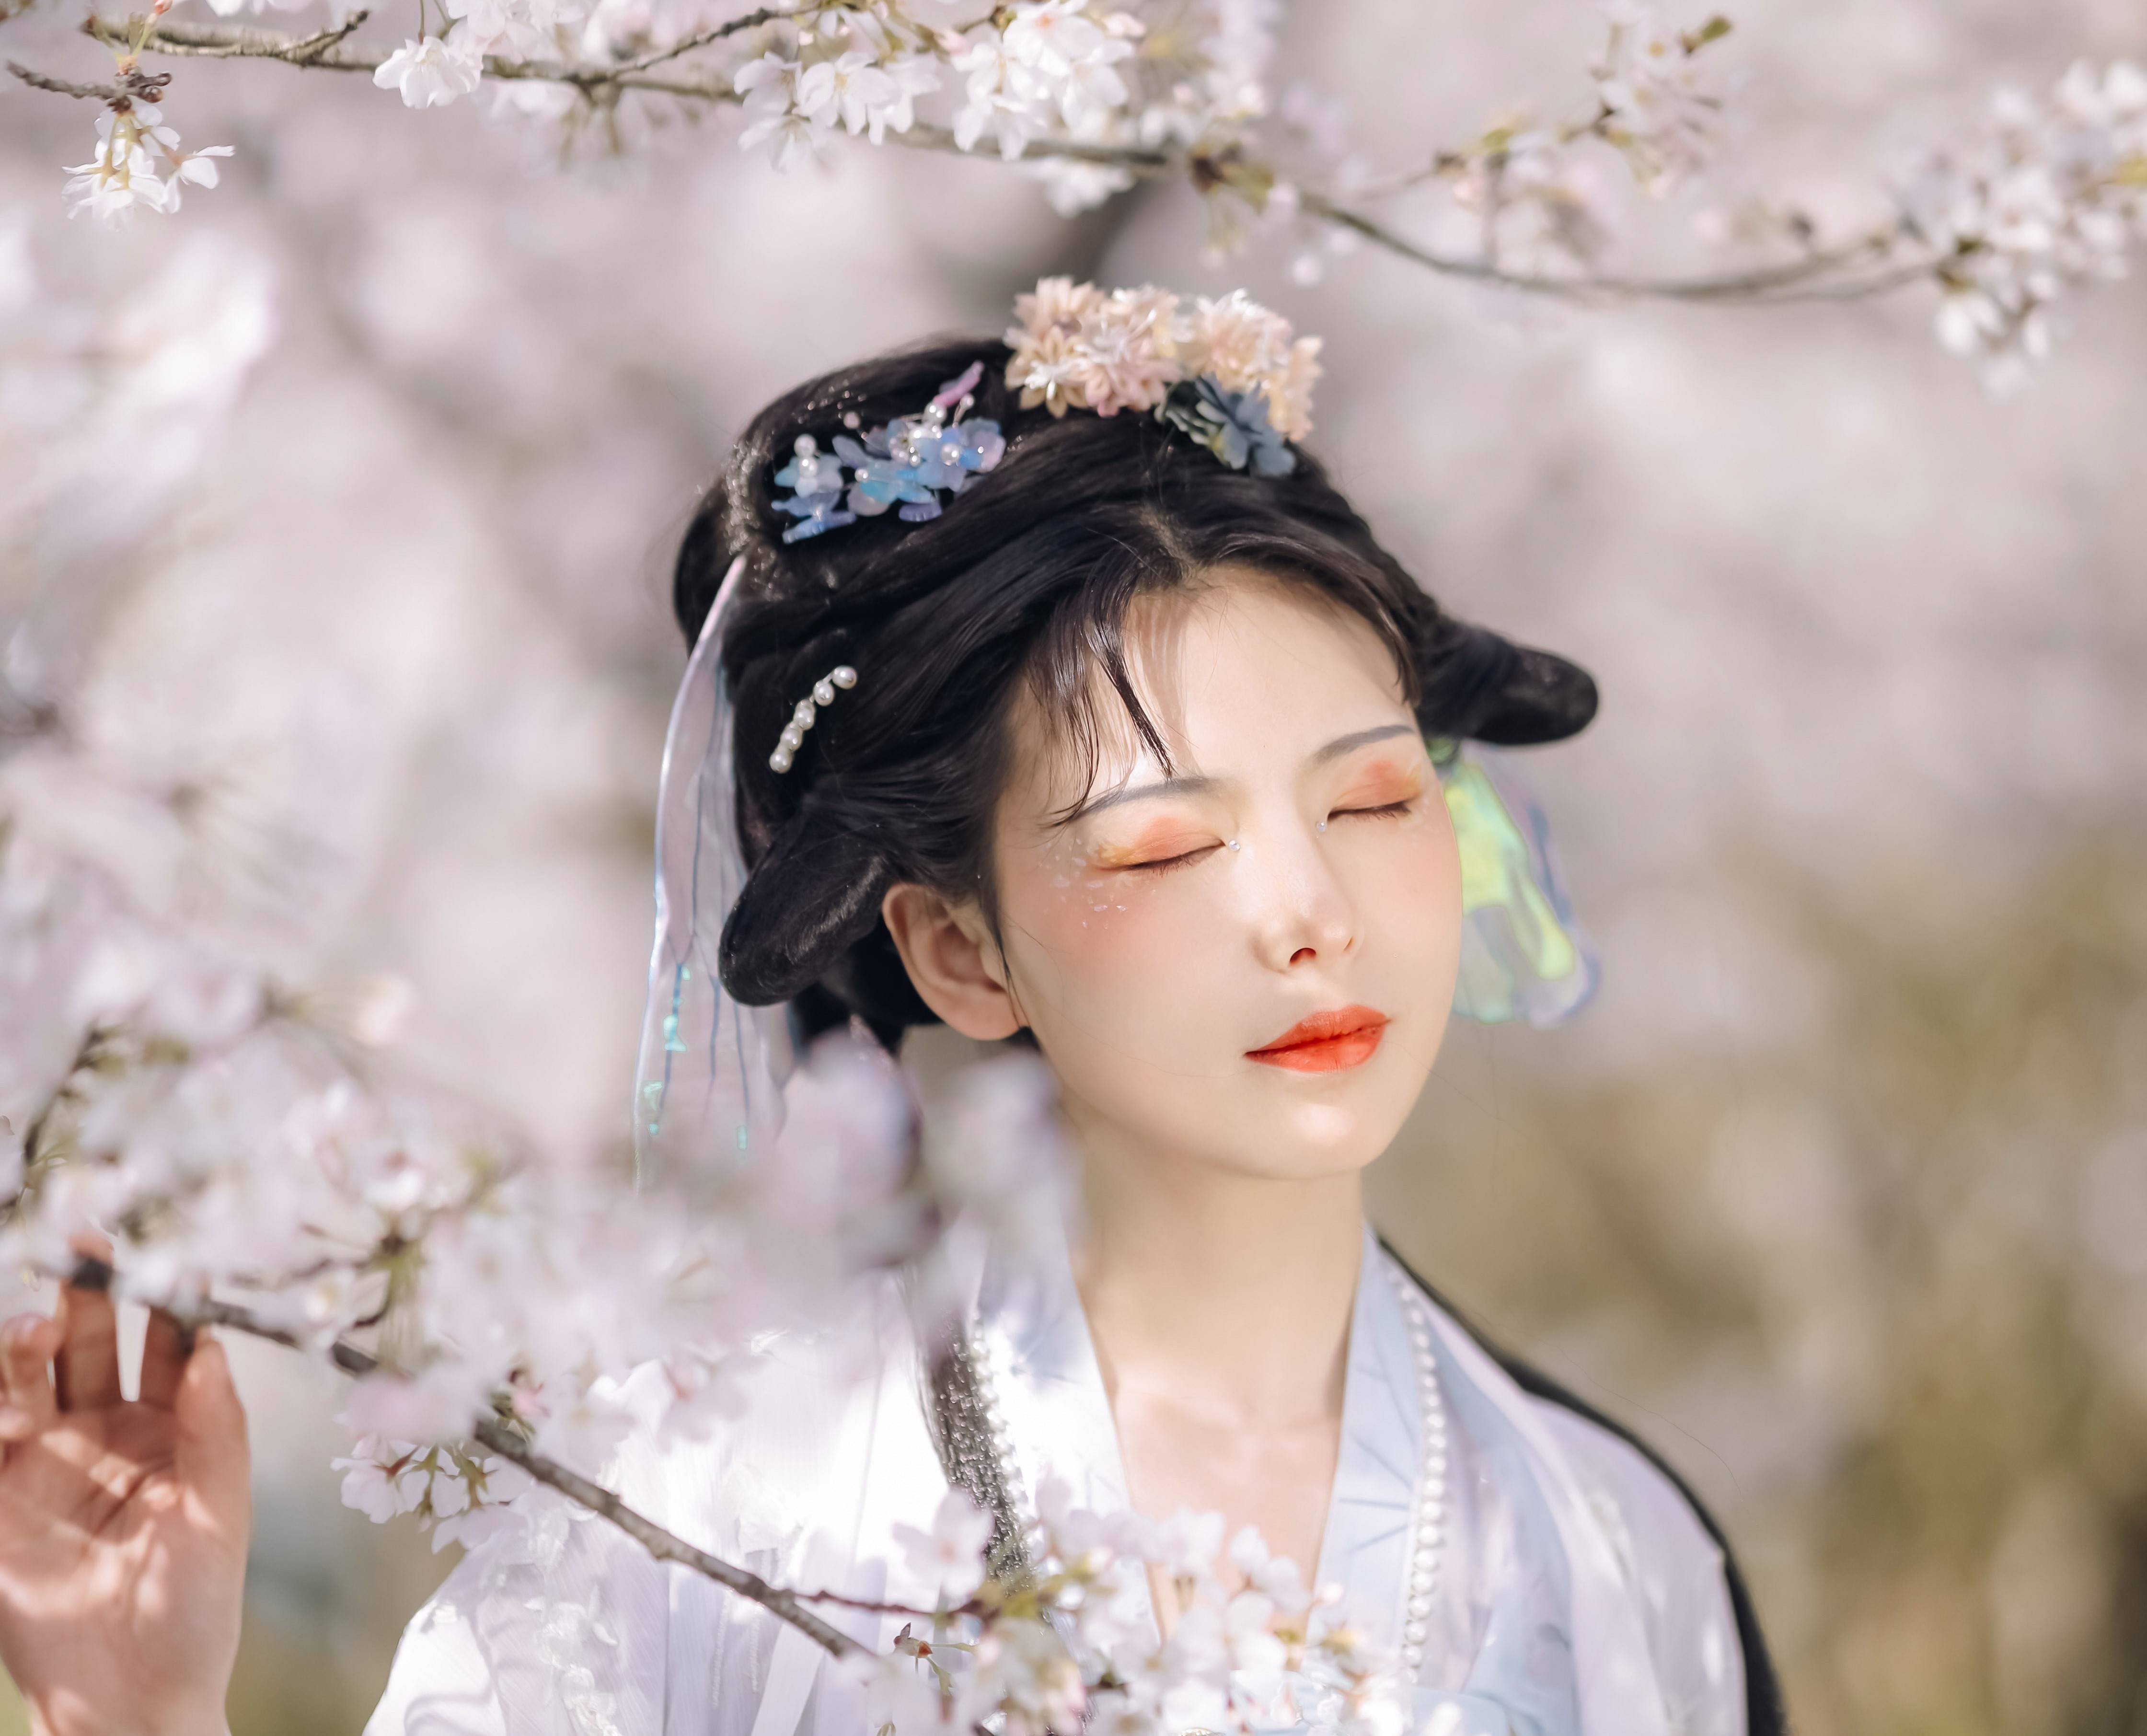 Archaic Wind Hanfu Women Outdoors Flower In Hair Asian 4480x3622